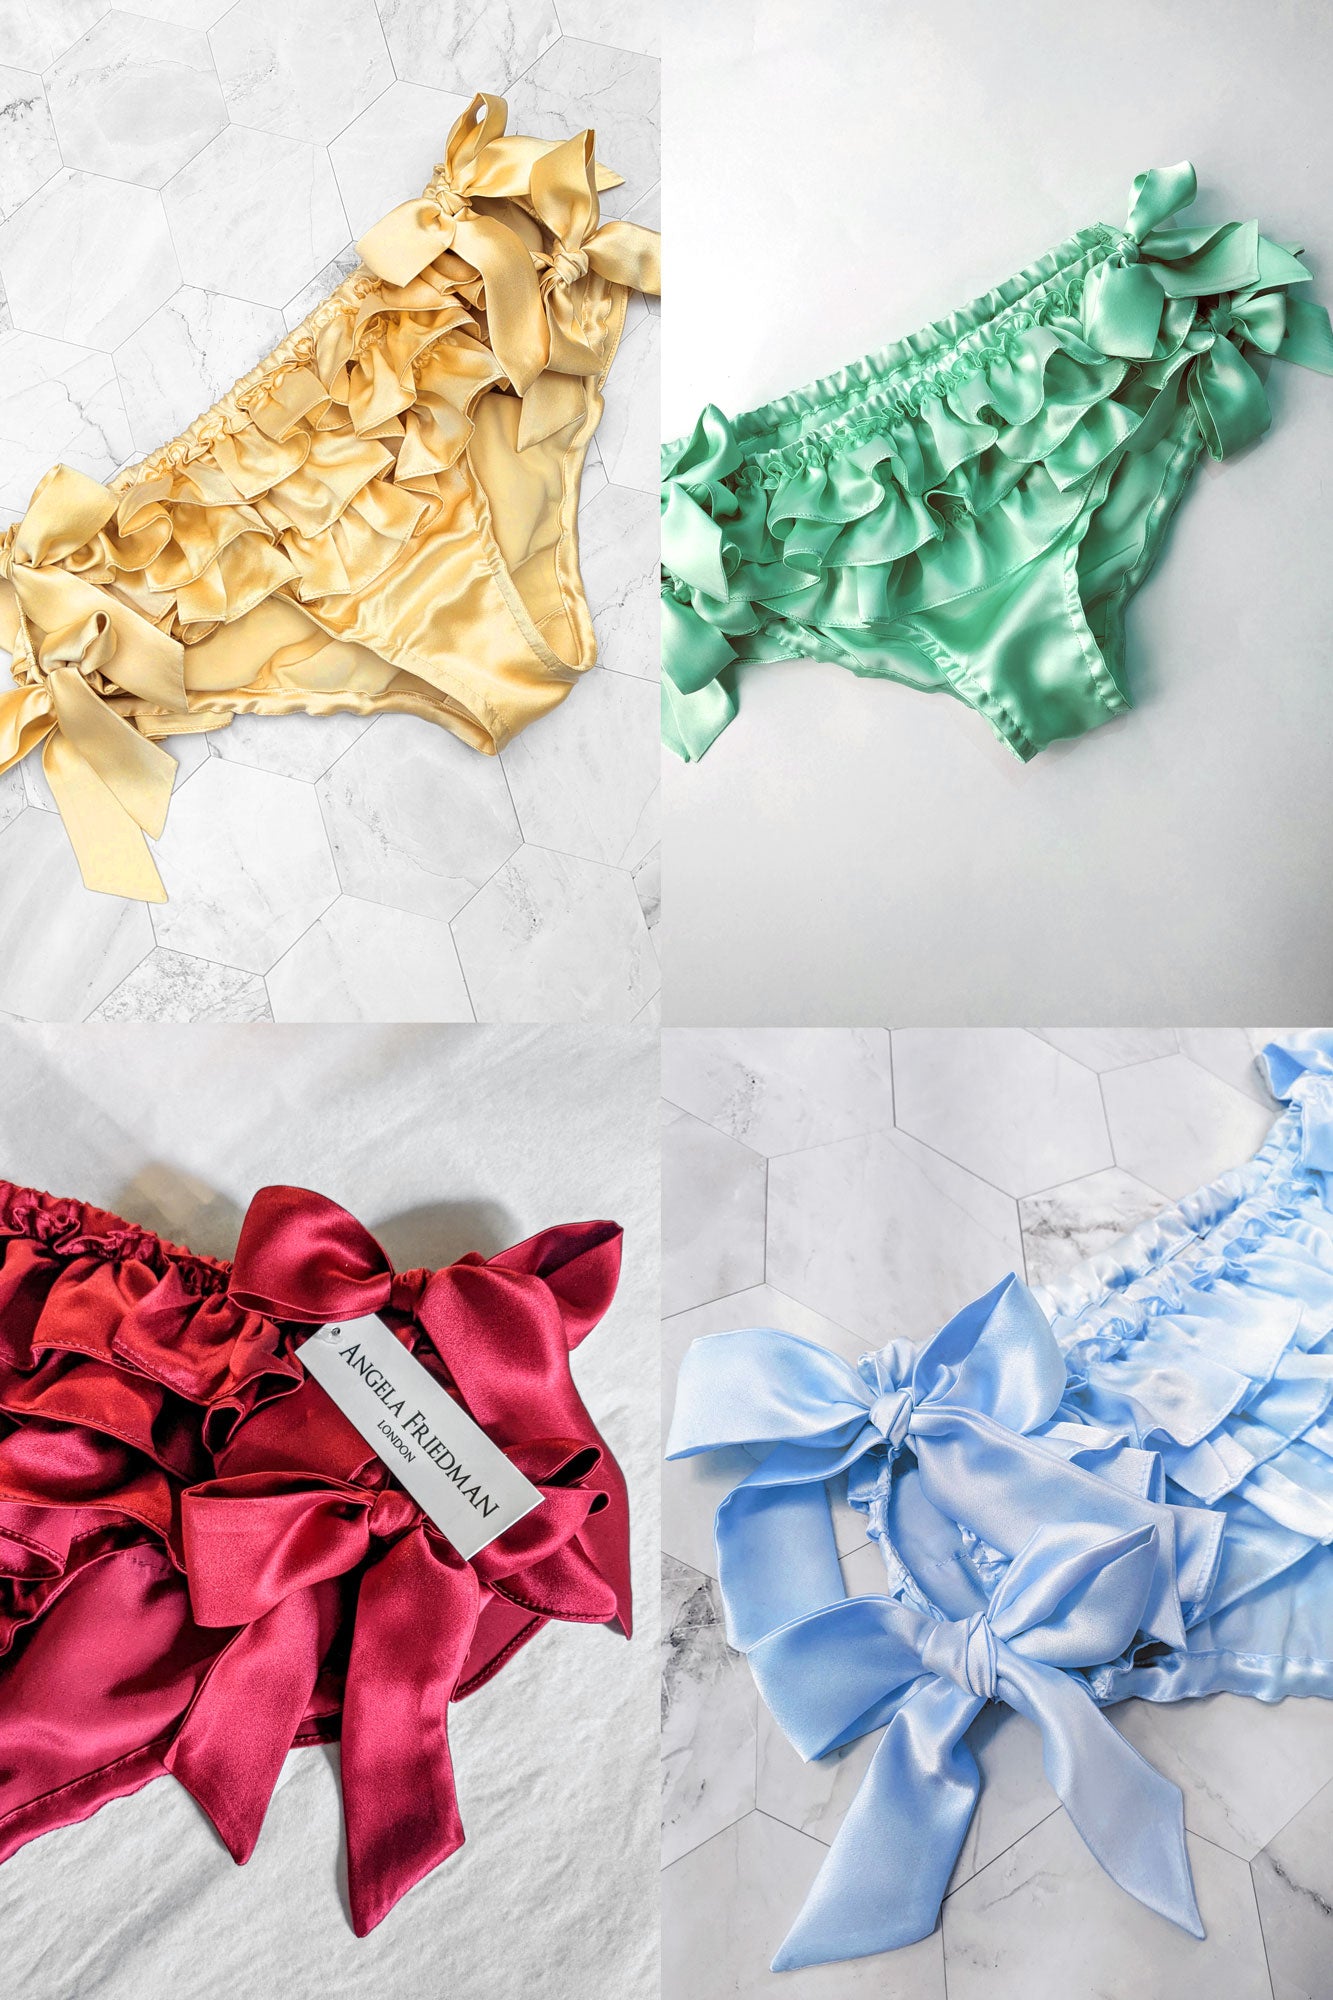 Custom silk ruffled panties in yellow, green, red, and blue